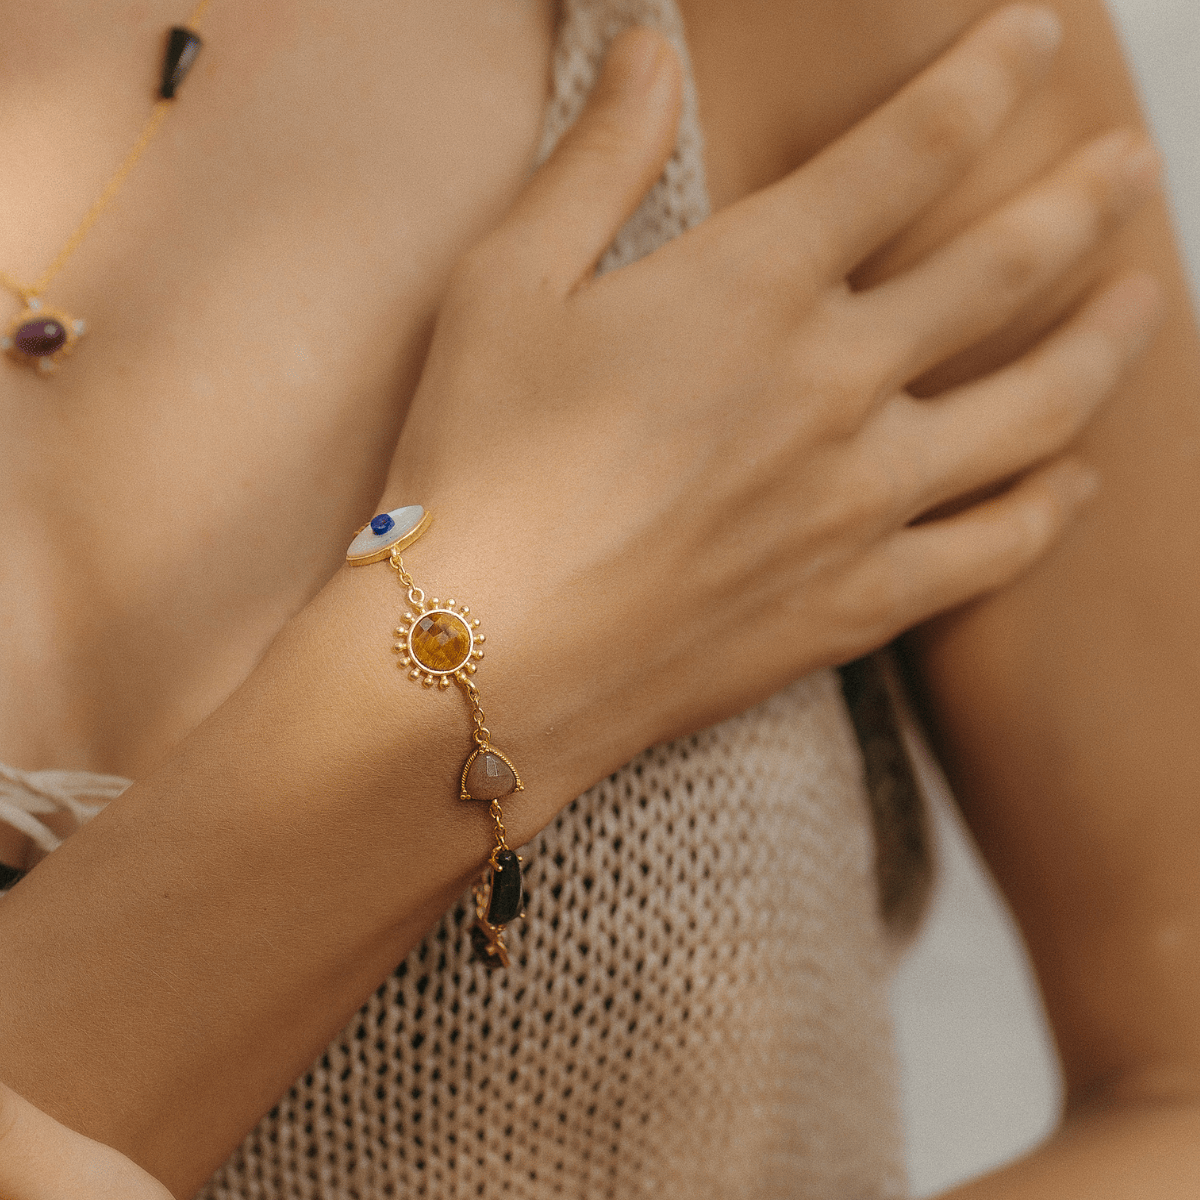 Buy 18k Gold Infinity Bracelet Online India | STAC Fine Jewellery